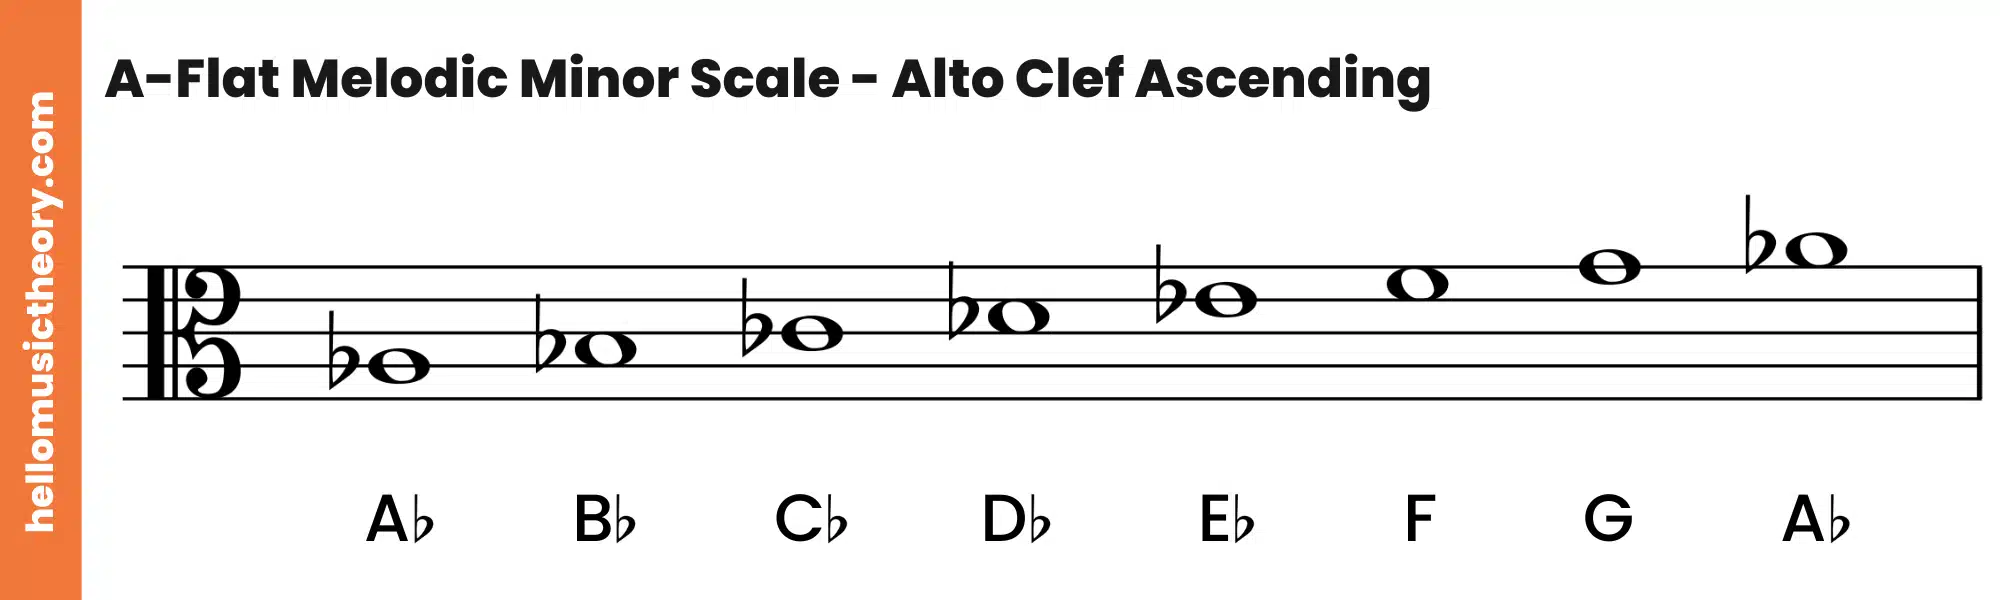 A-Flat Melodic Minor Scale Alto Clef Ascending